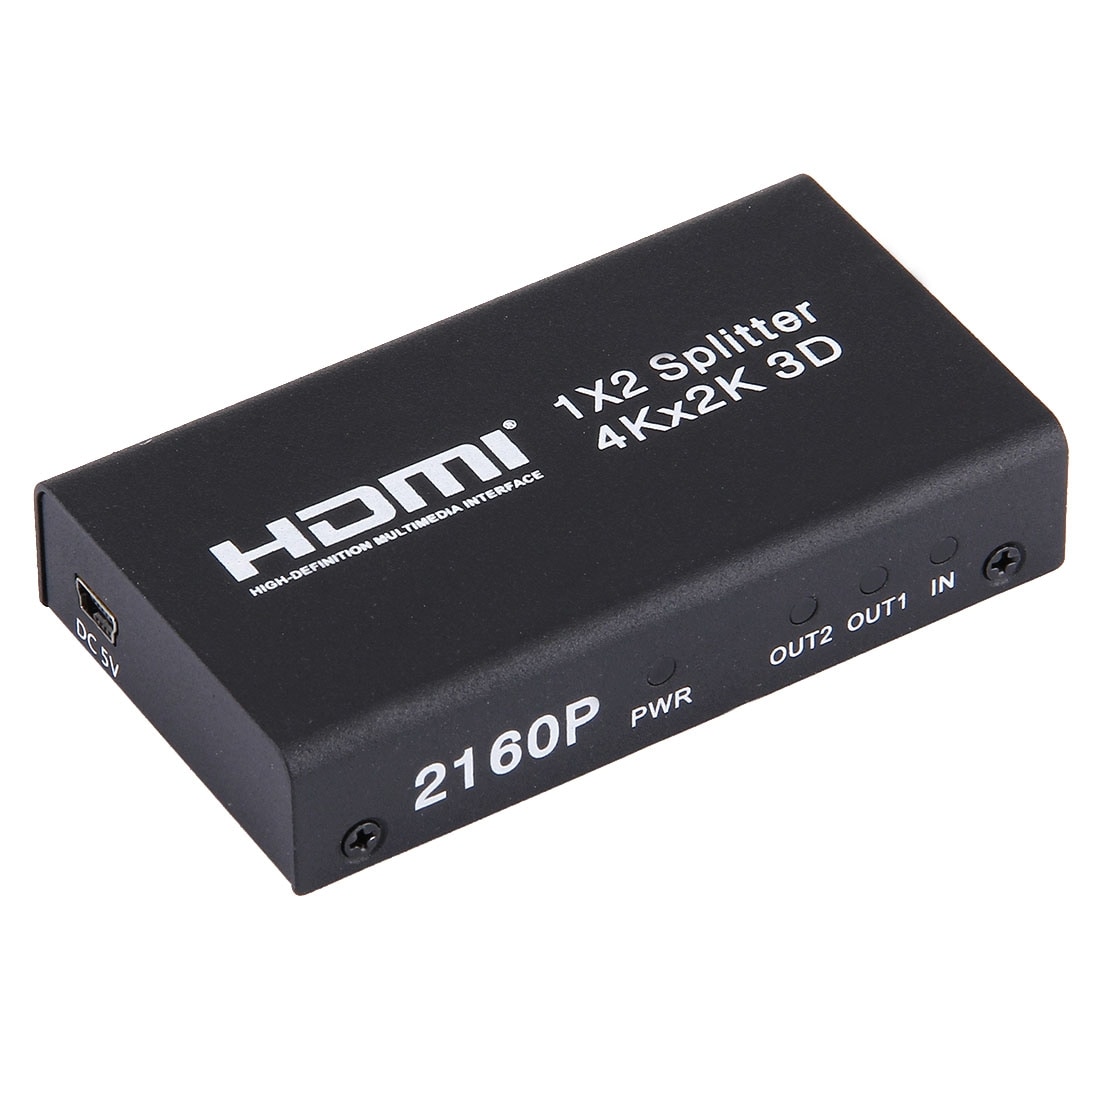 HDMI 1x2 2160P Switch Splitter, Support 4Kx2K, 3D